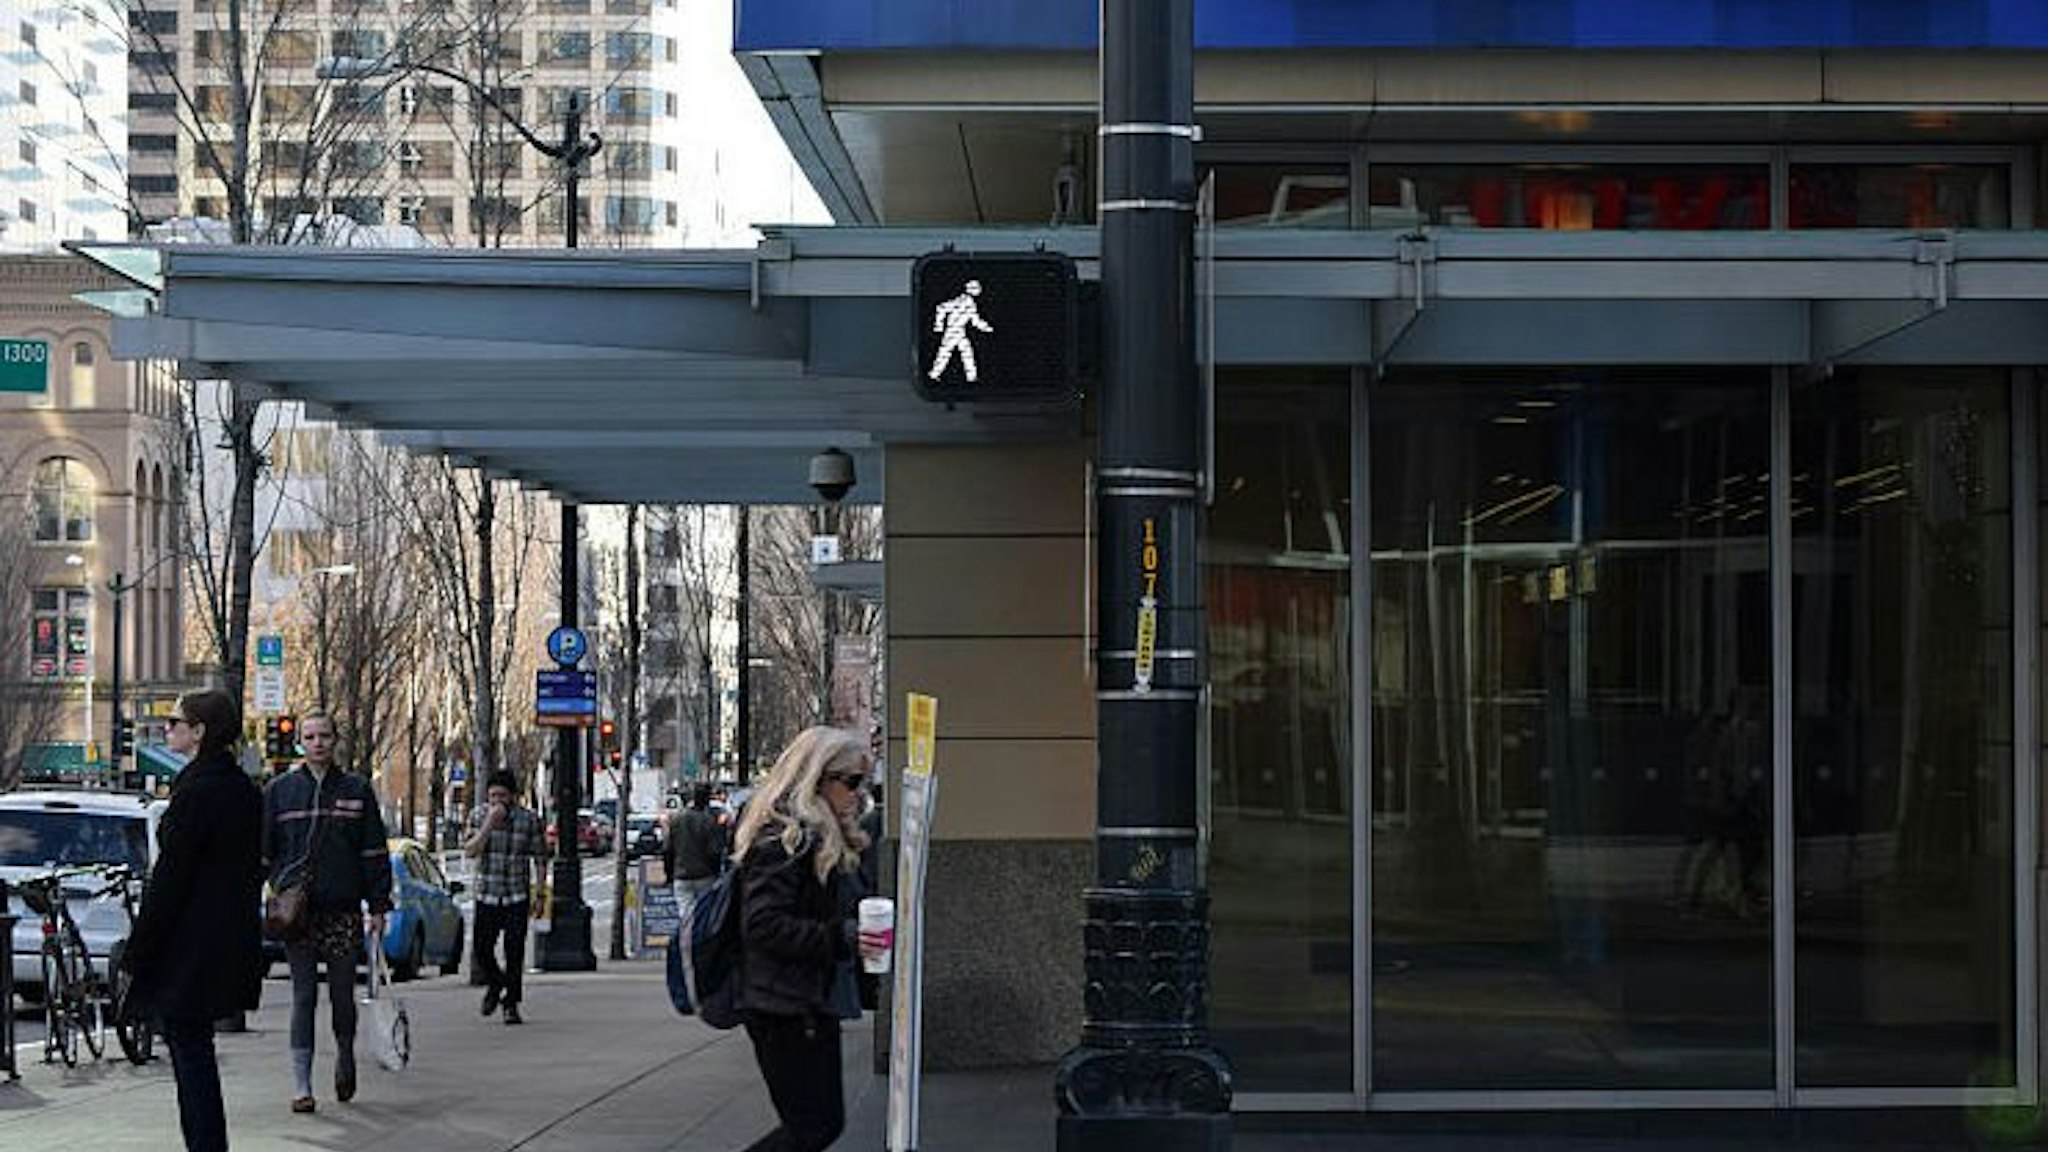 Pedestrians walk by this downtown Seattle, Washington location.